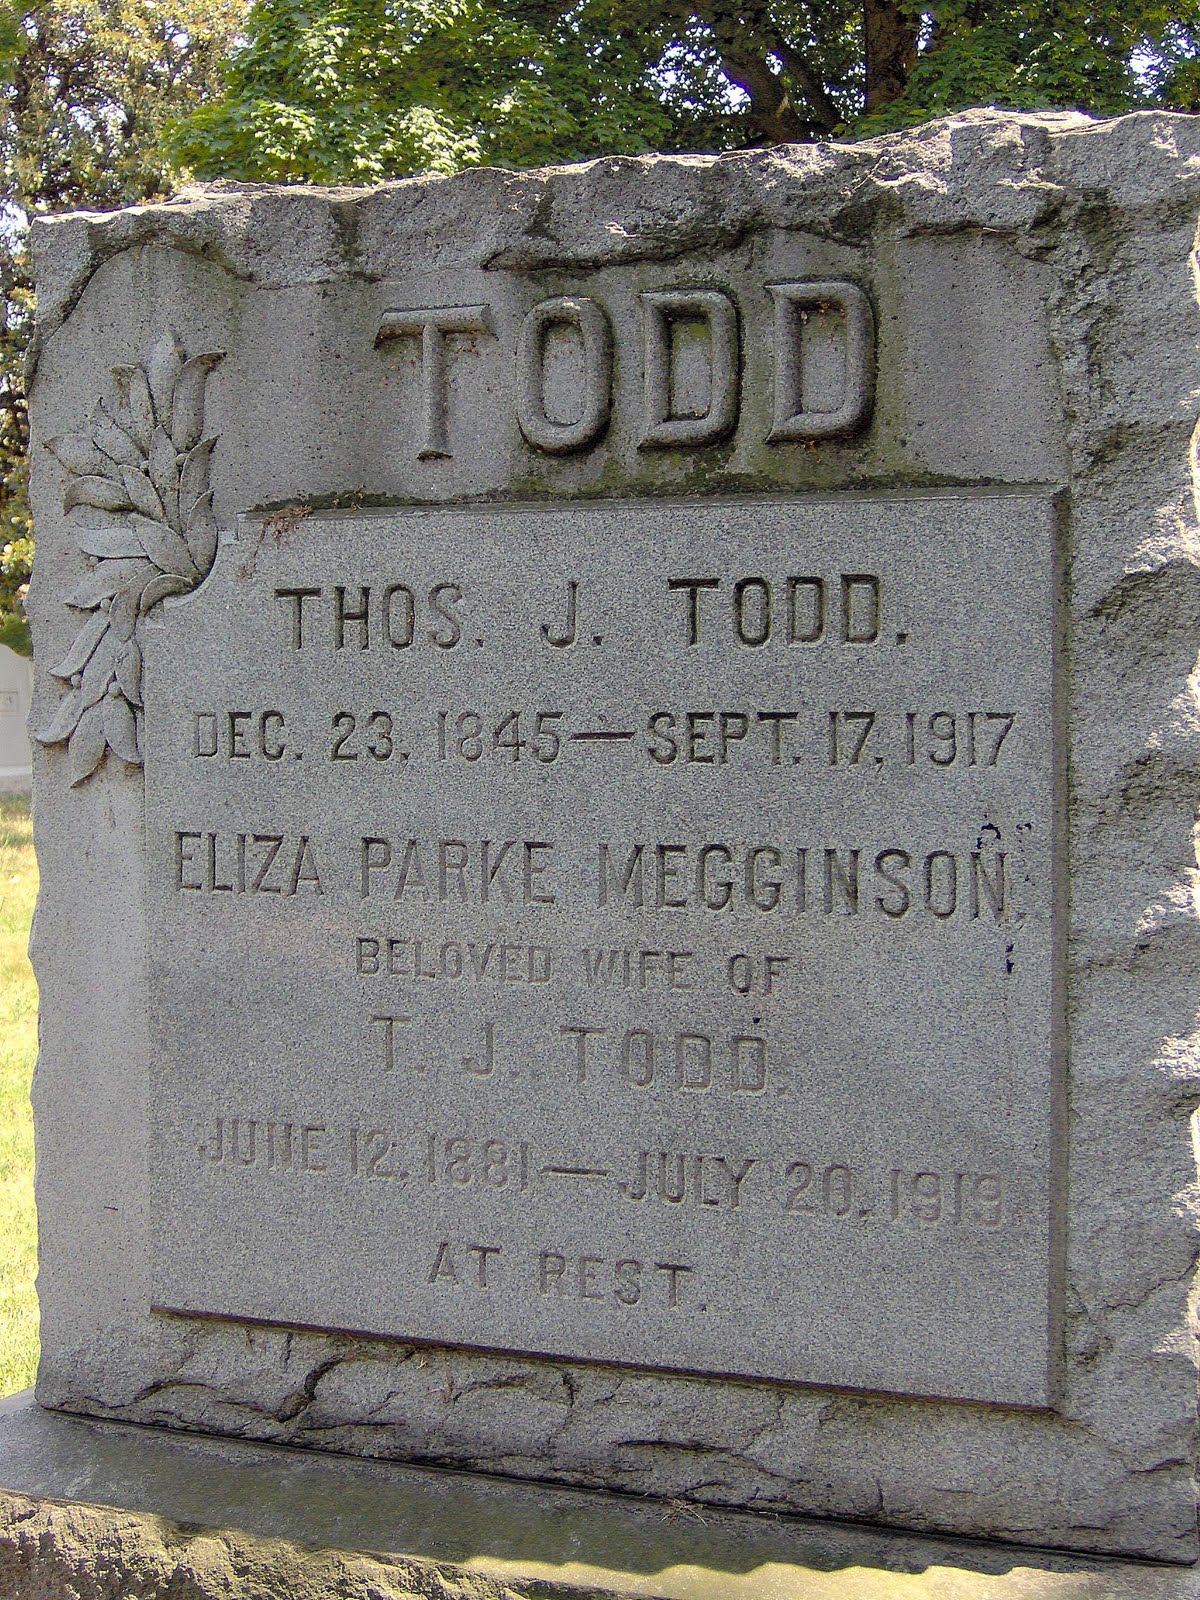 Thomas Jefferson Tombstone